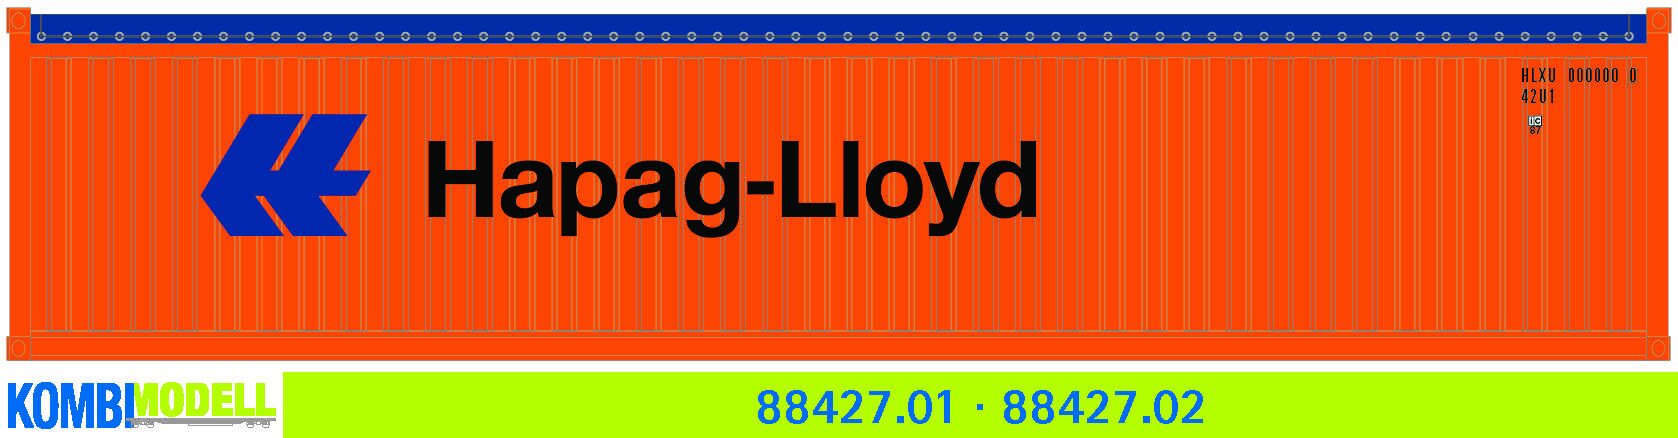 Kombimodell 88427.02 Ct 40' Open-Top (42U1) Hapag-Lloyd" #HLXU 560578" 